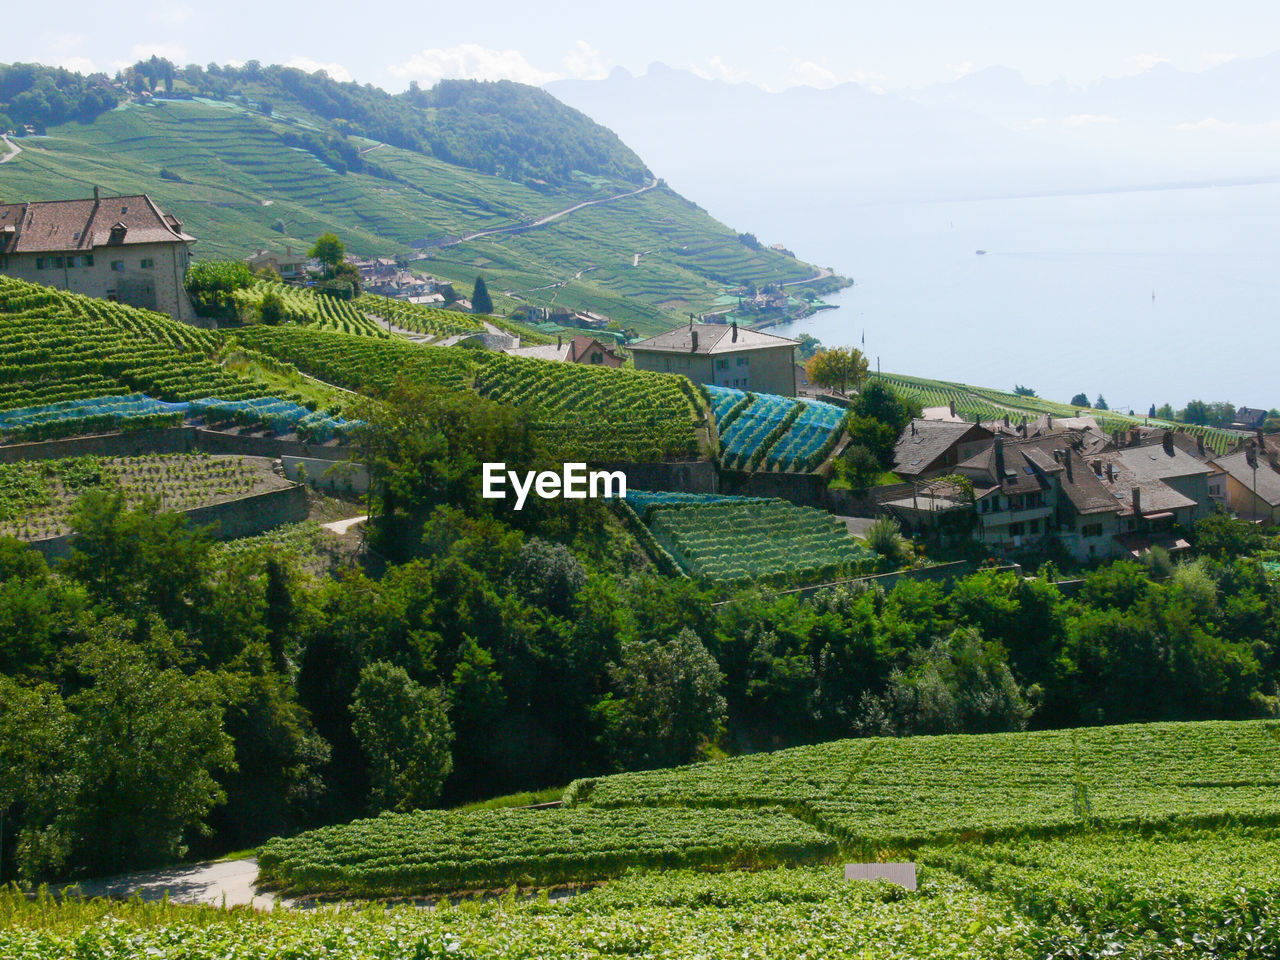 View of vineyard in town